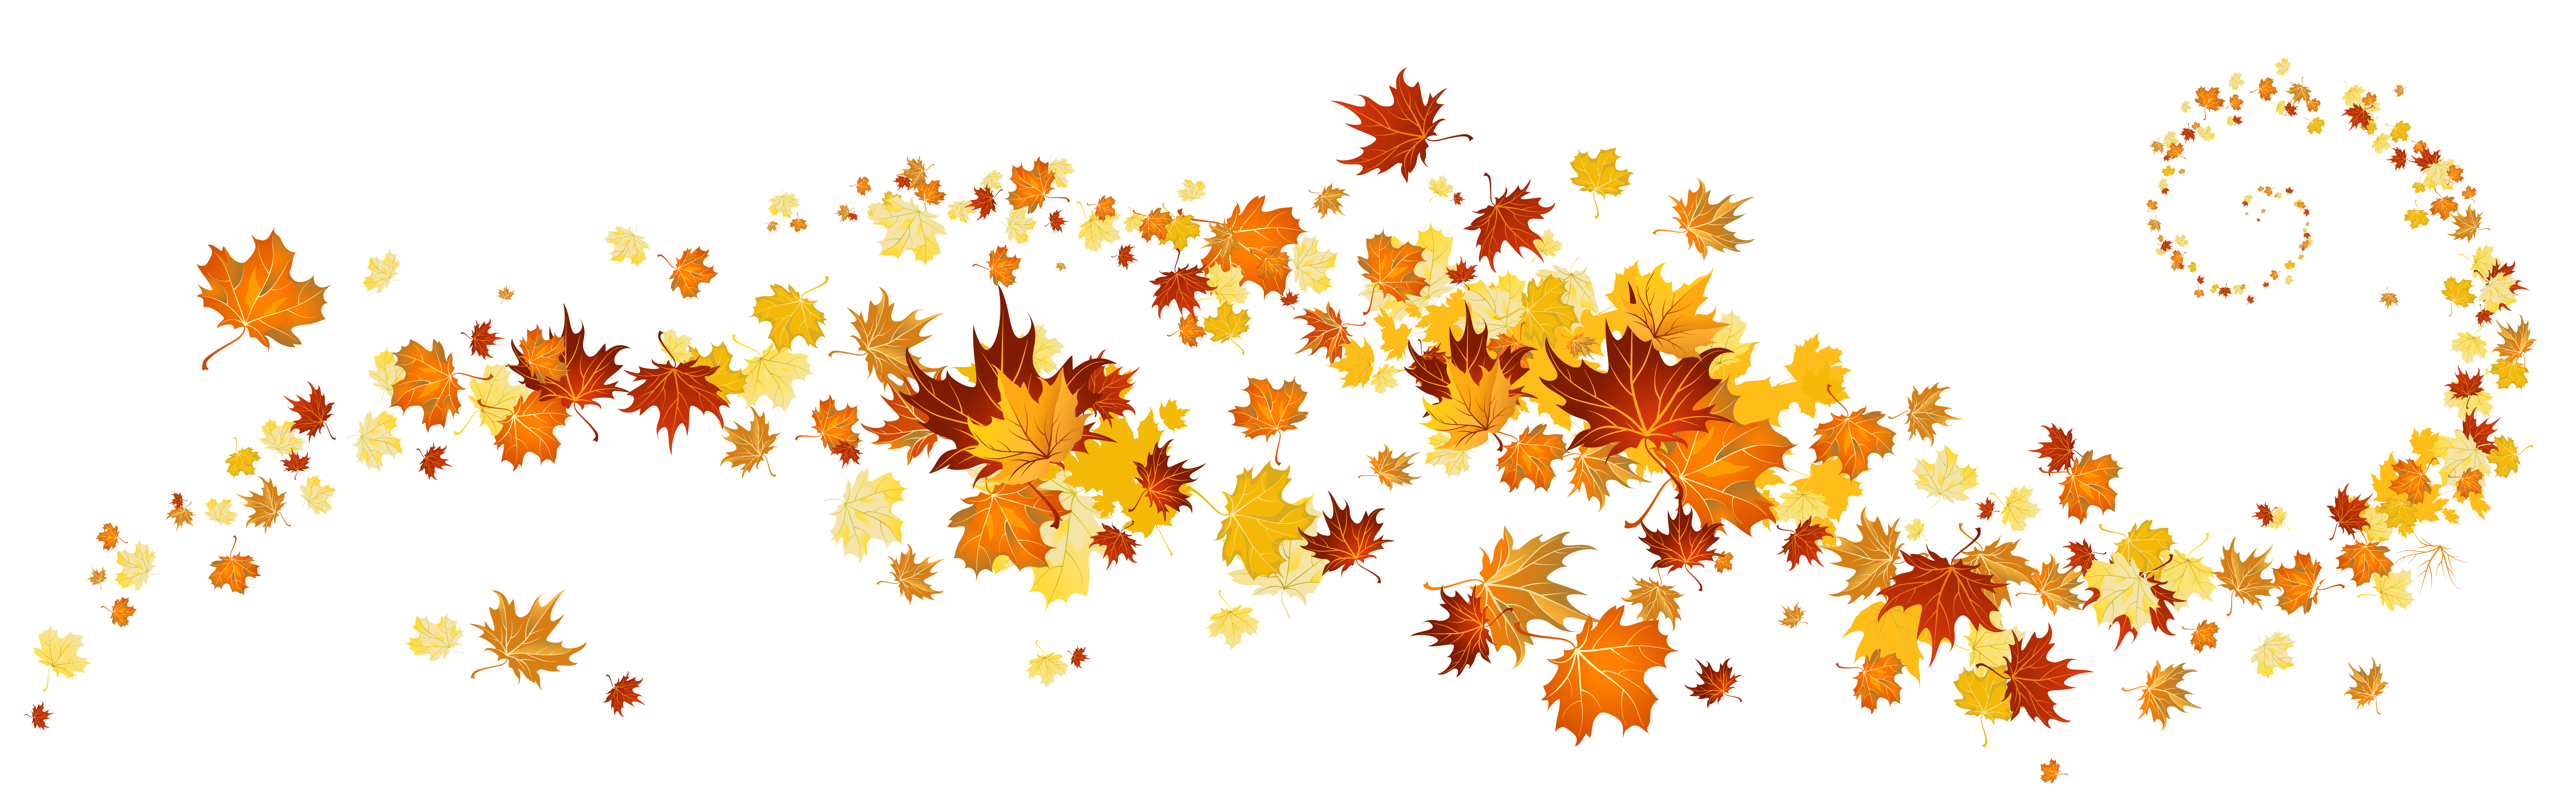 Fall leaves fall clip art aut - Clip Art Fall Leaves